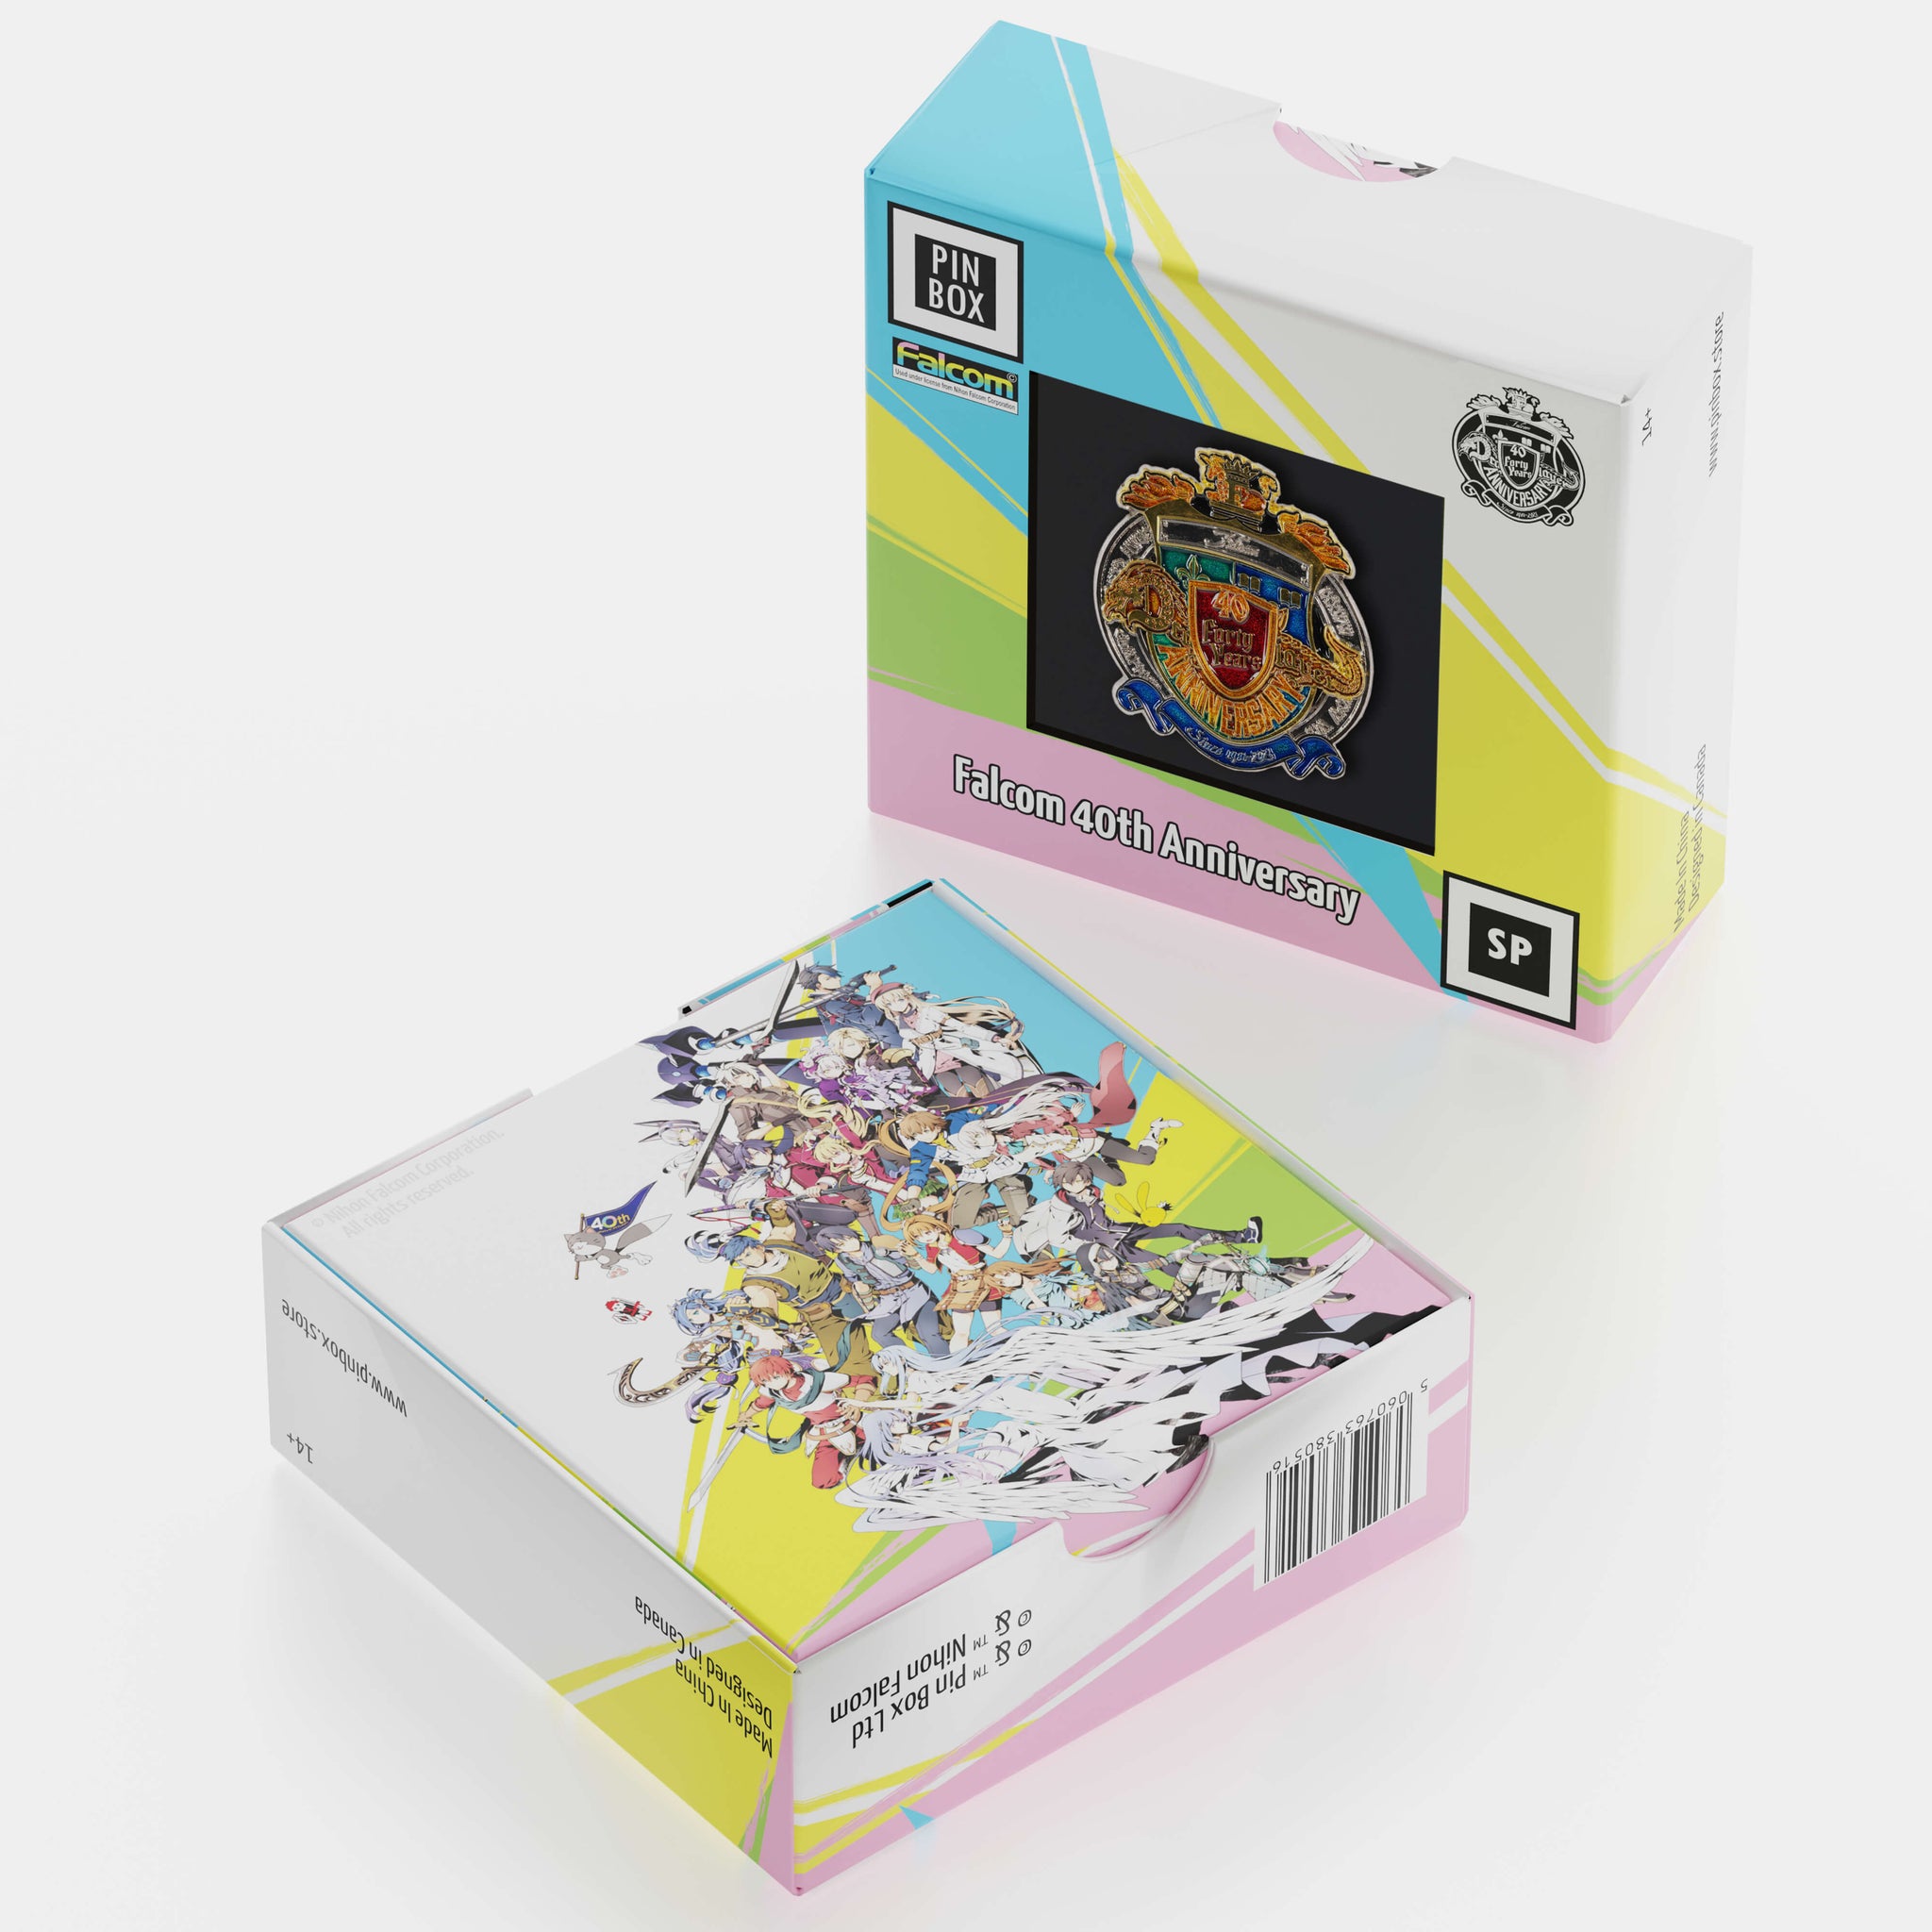 Falcom 40th Anniversary Crest - Limited Edition - Pin Box Single Print